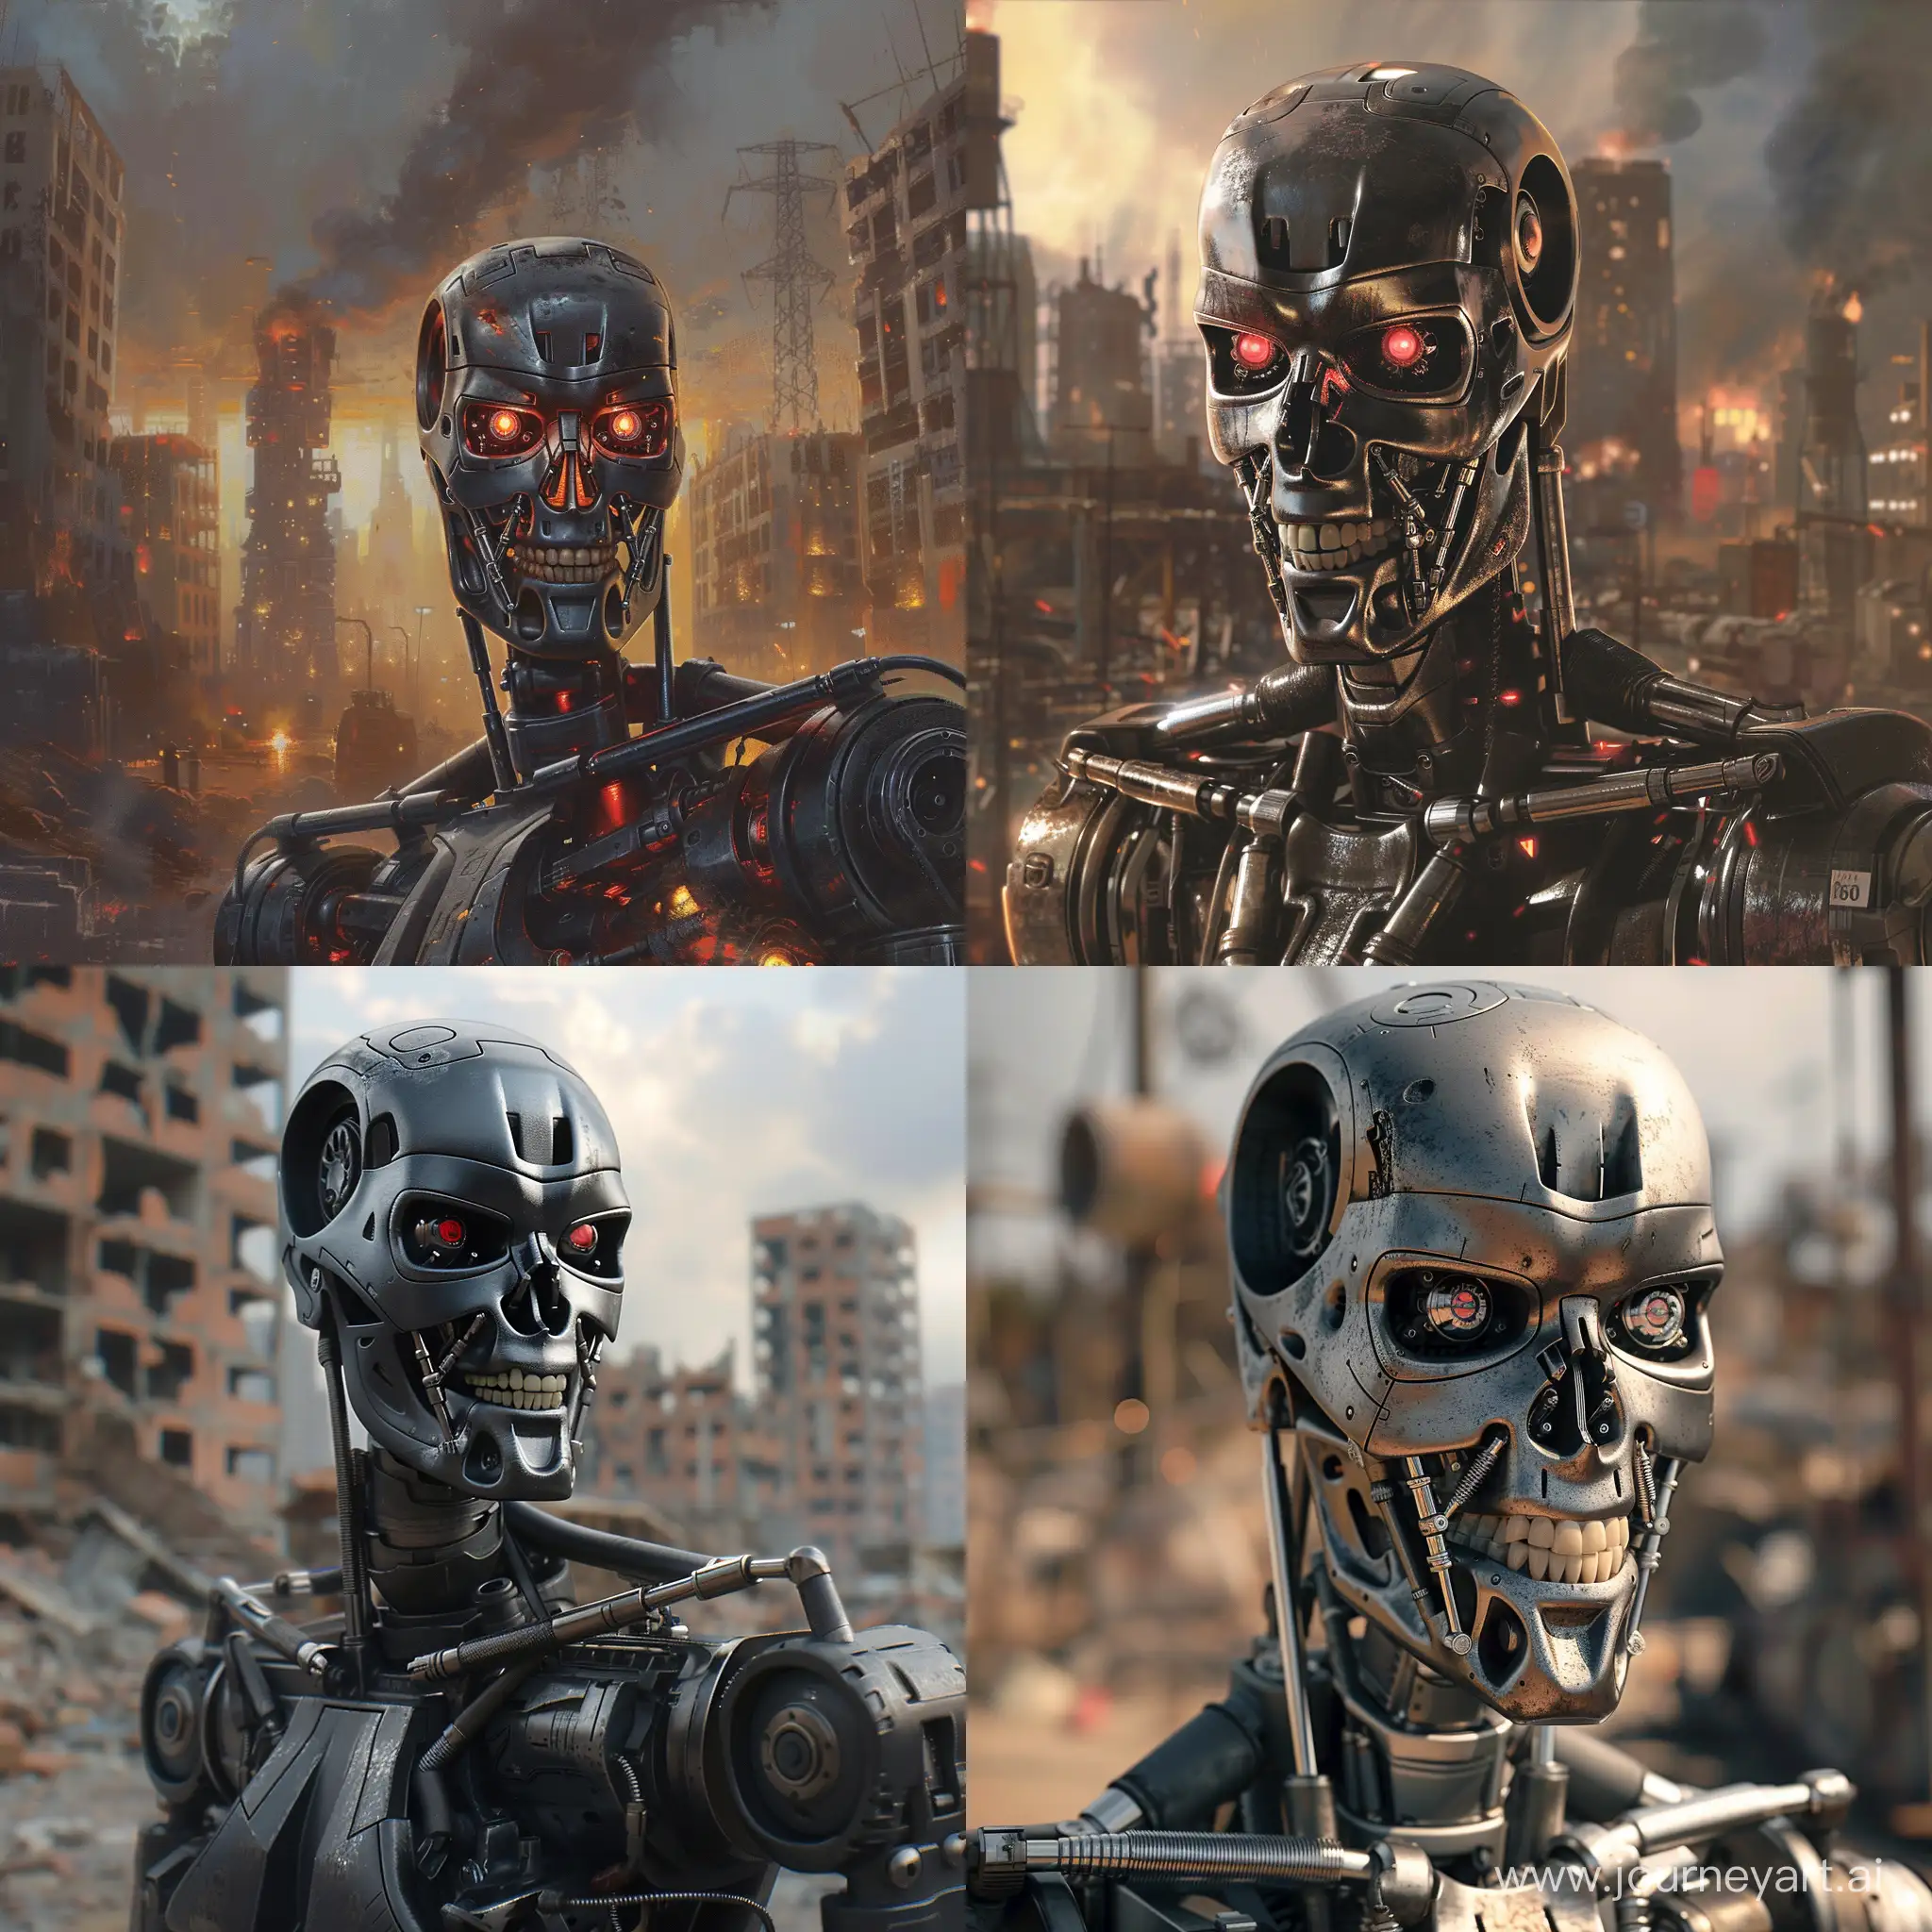 Terminator-600-in-PostApocalyptic-Setting